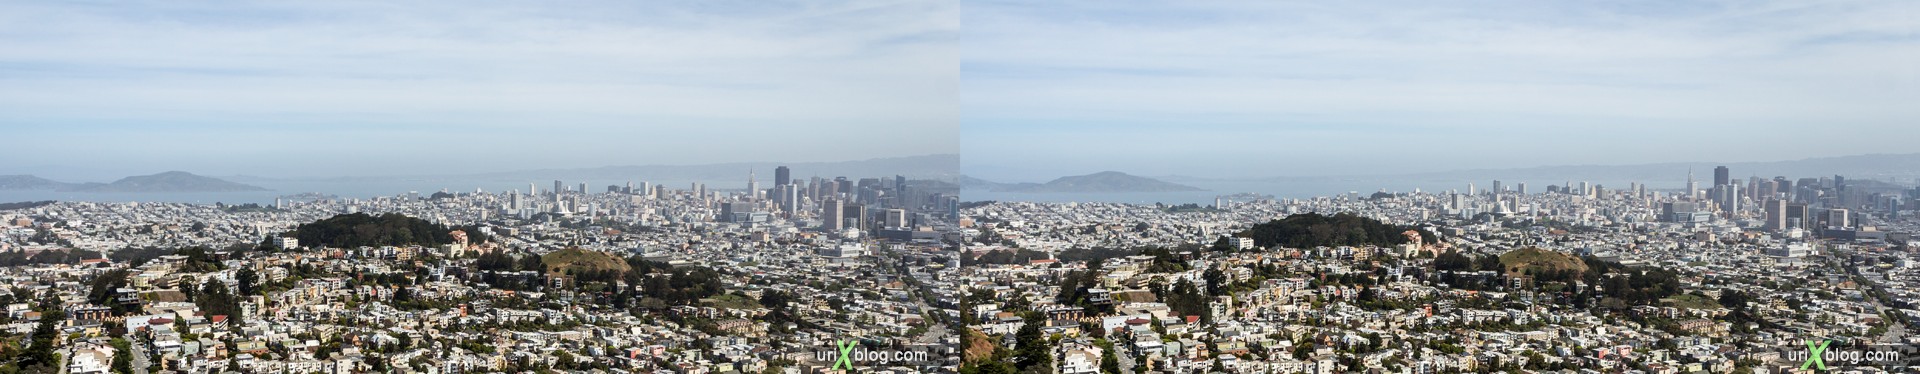 2013, Twin Peaks, San Francisco, USA, 3D, stereo pair, cross-eyed, crossview, cross view stereo pair, stereoscopic